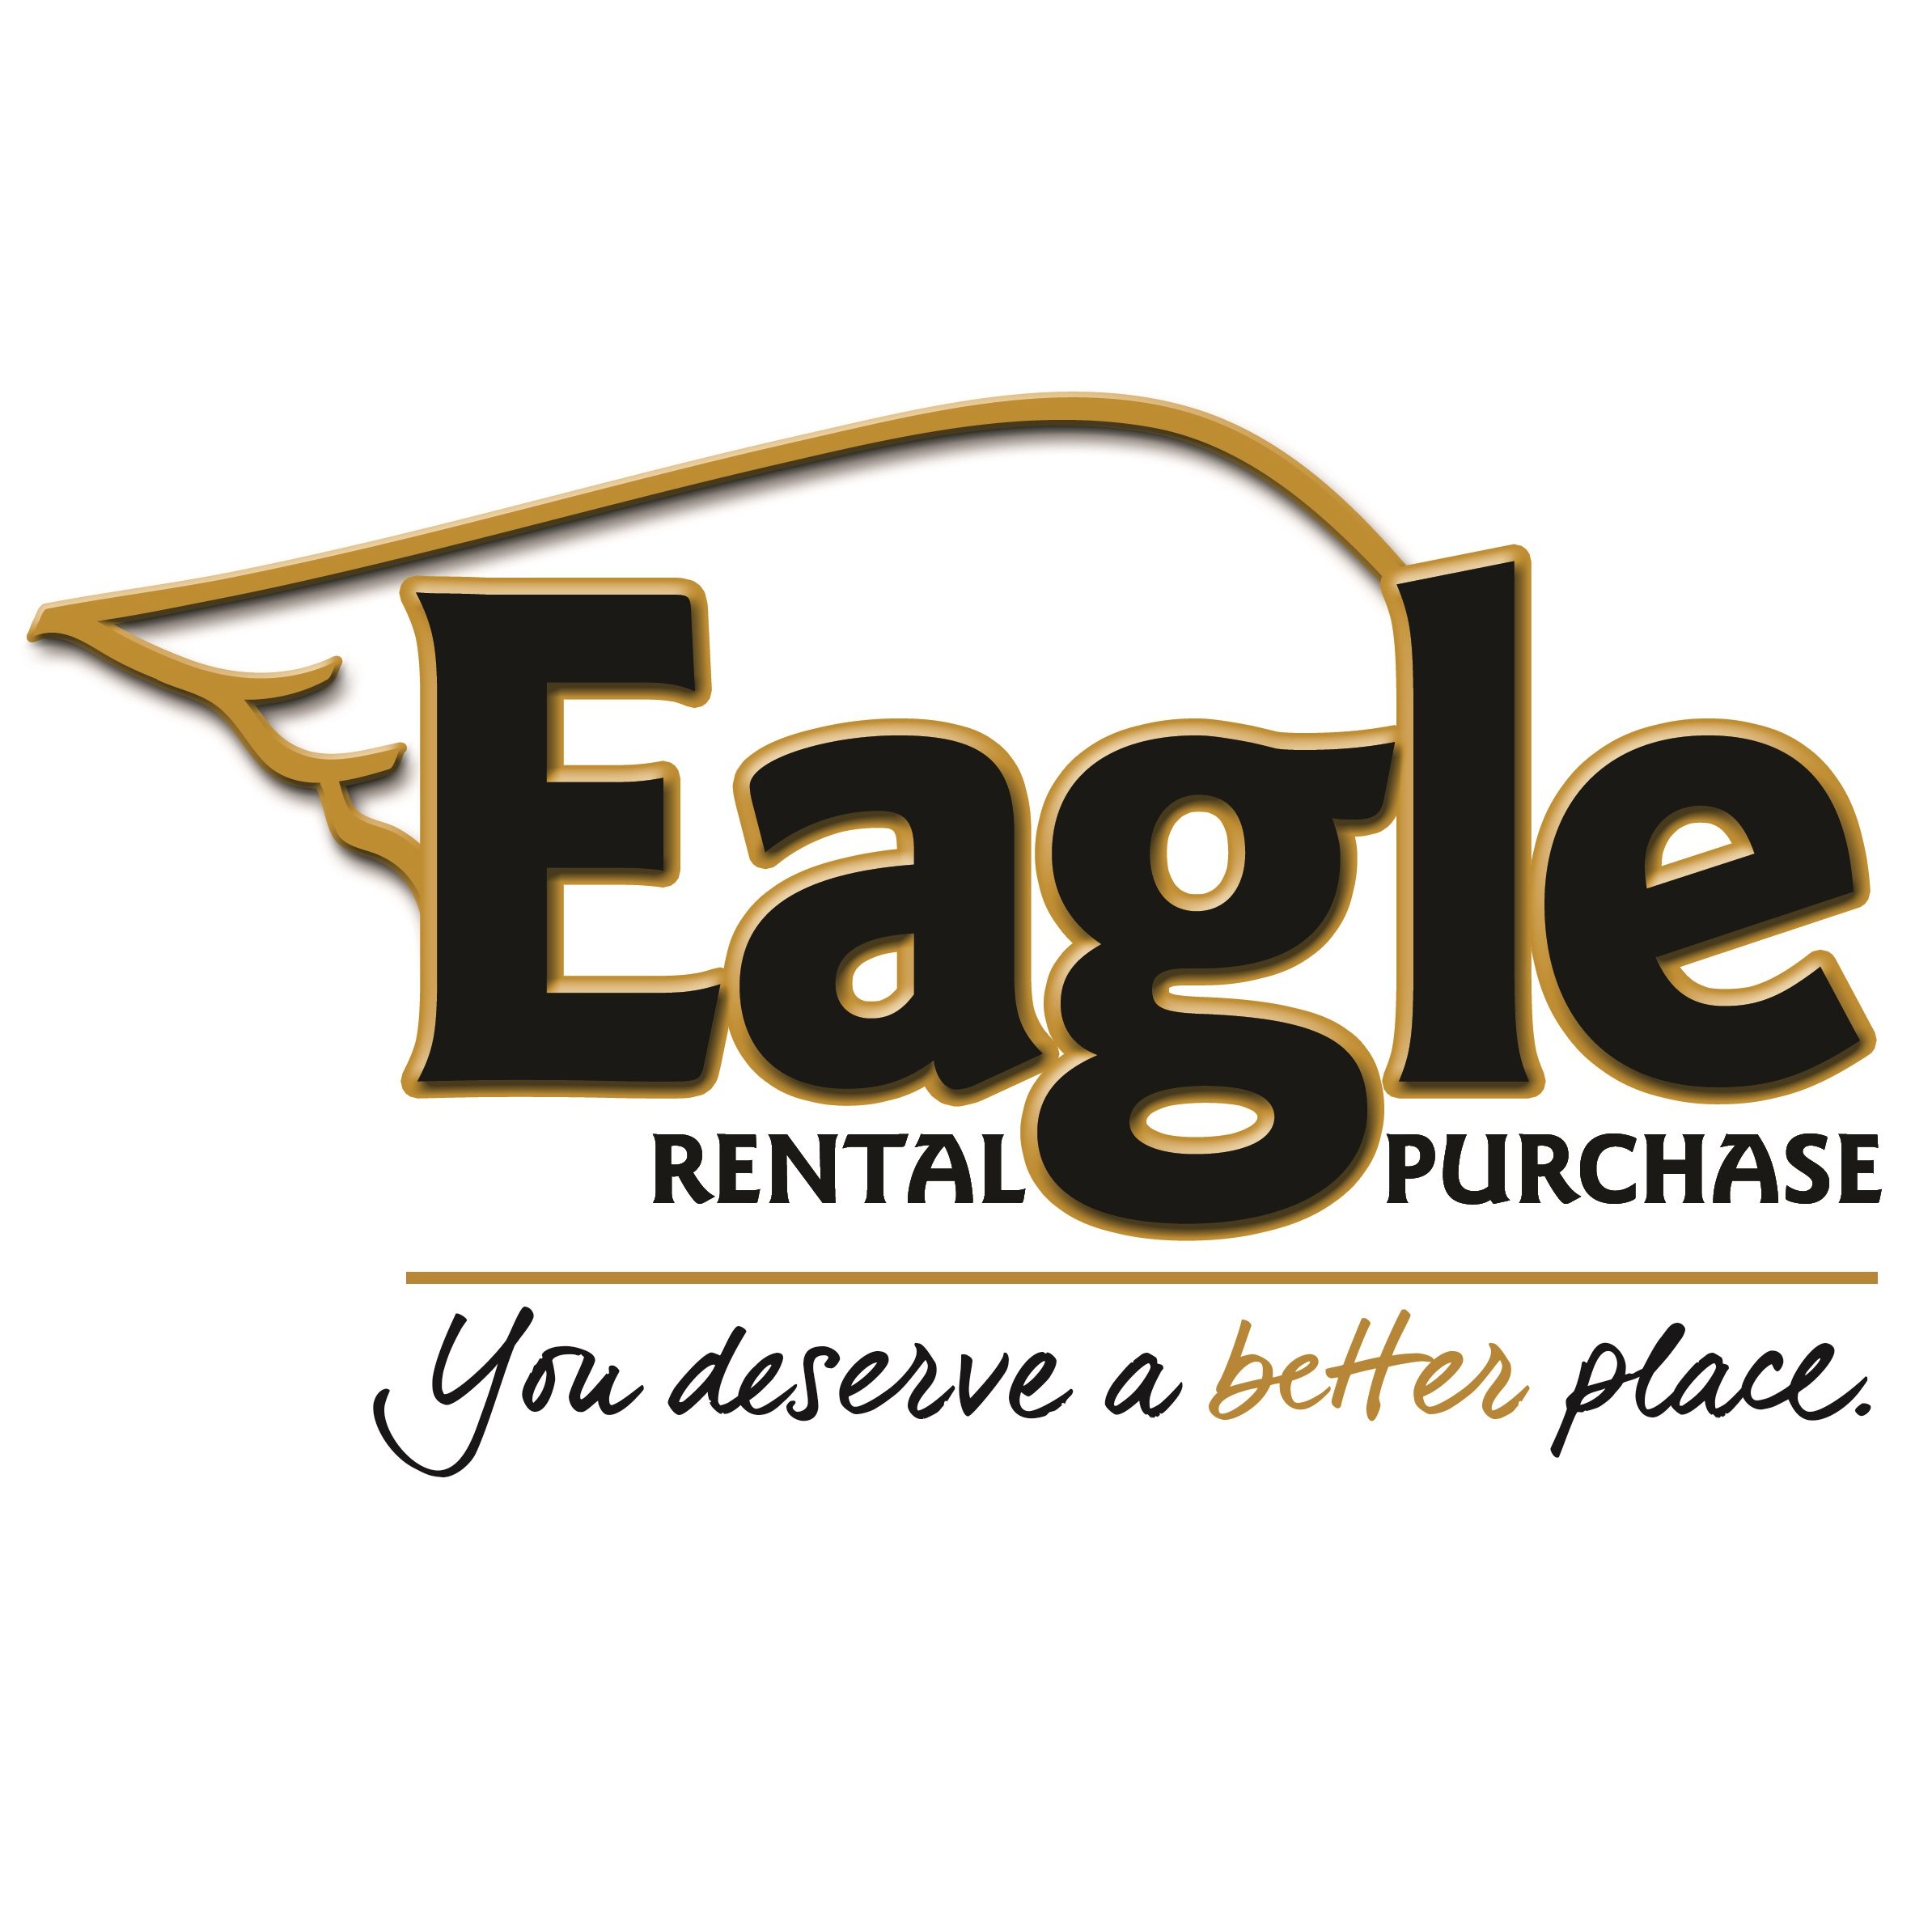 Eagle Rental Purchase Photo